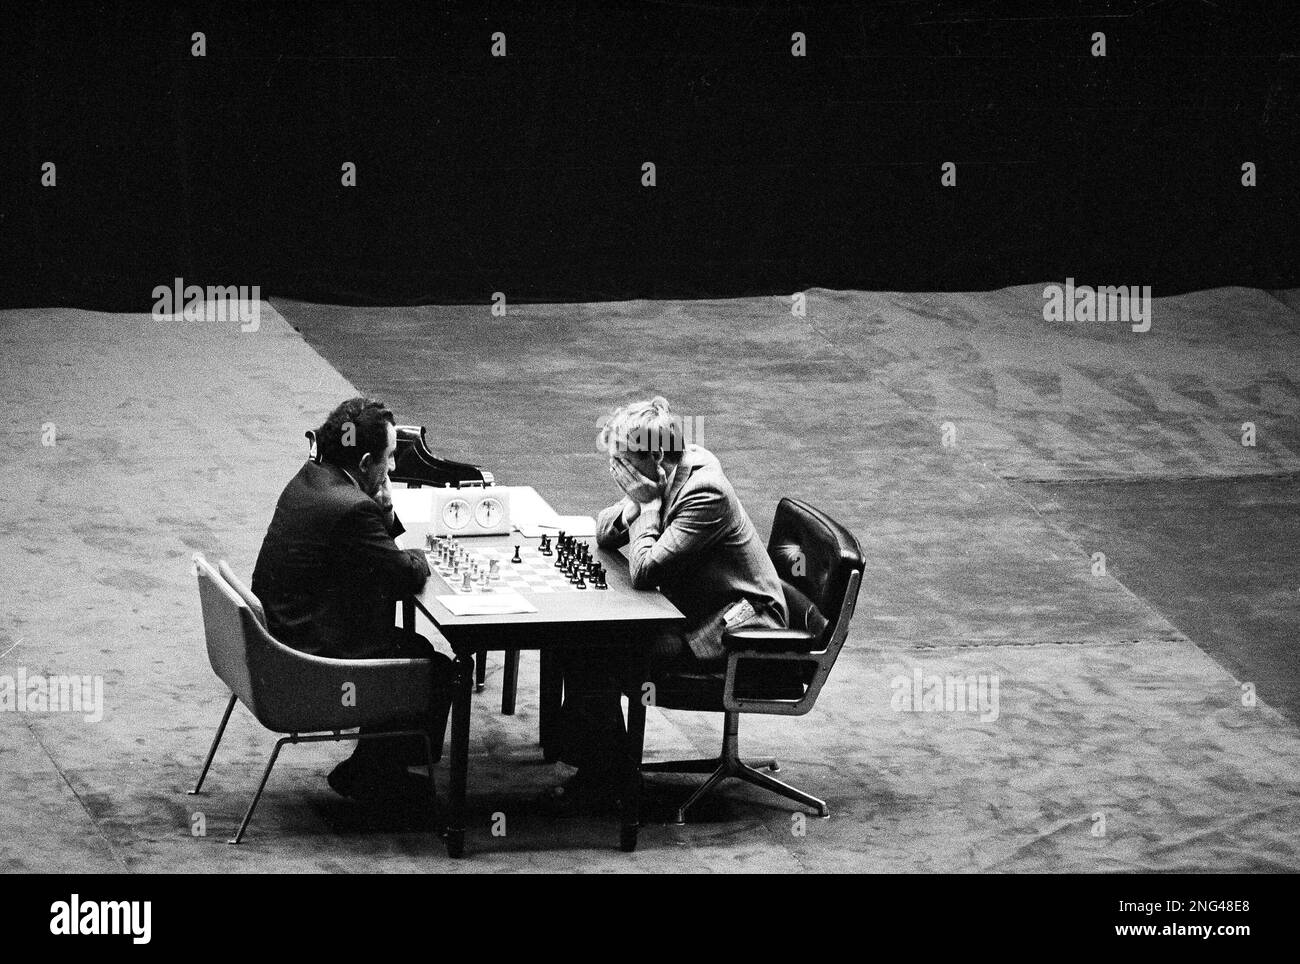 Bobby Fischer: Chess's beguiling, eccentric genius - BBC News